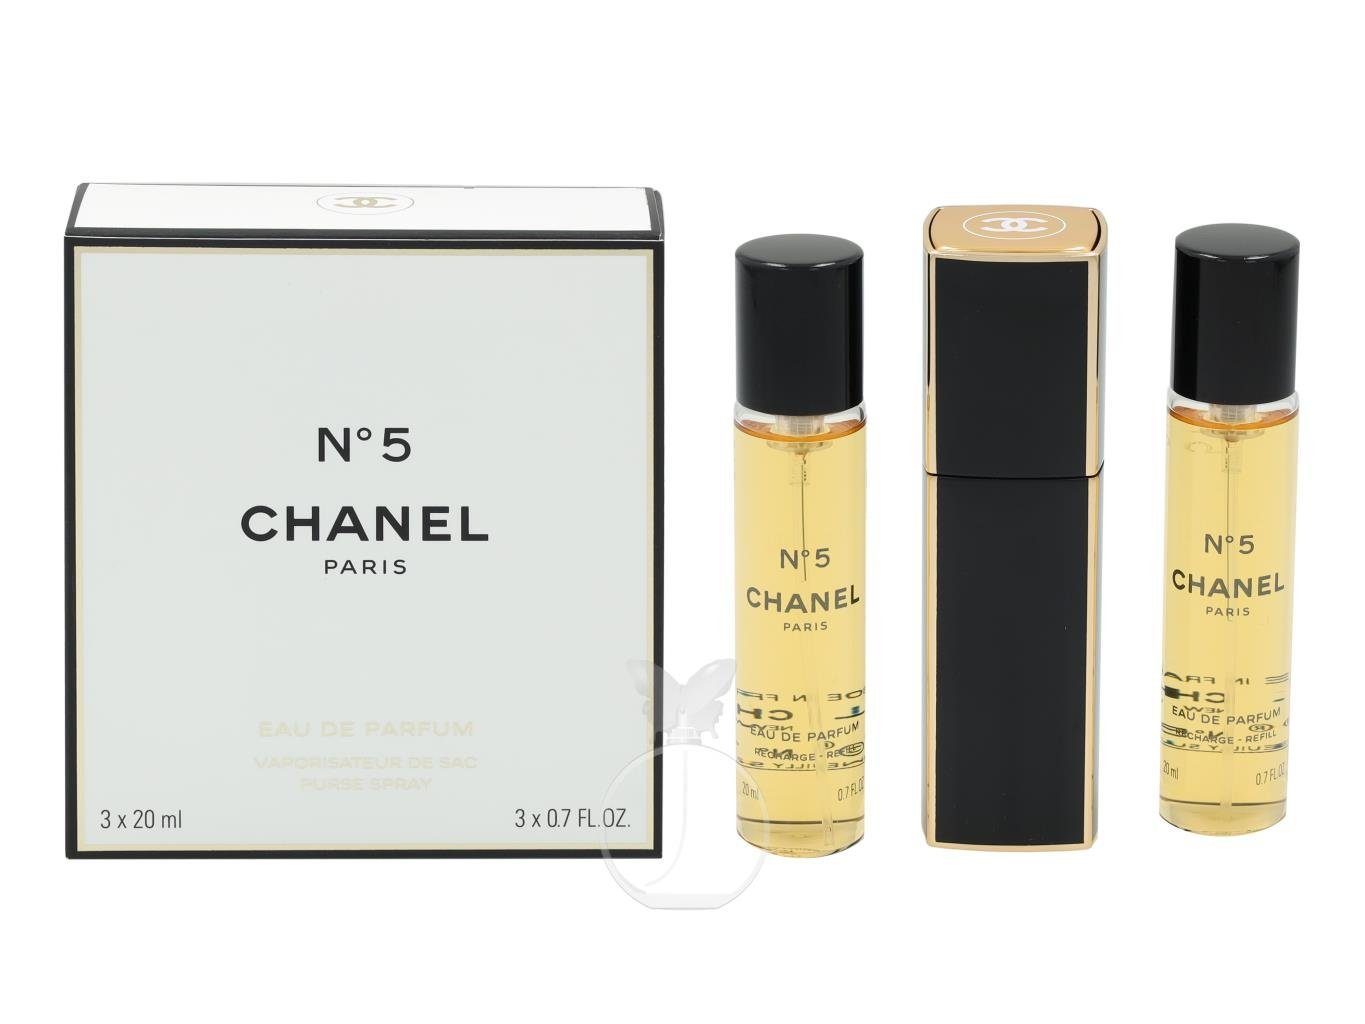 CHANEL x Zerstäuber Spray de Chanel 20 3 Parfum Eau and Twist ml Eau mit Parfum 5 No de